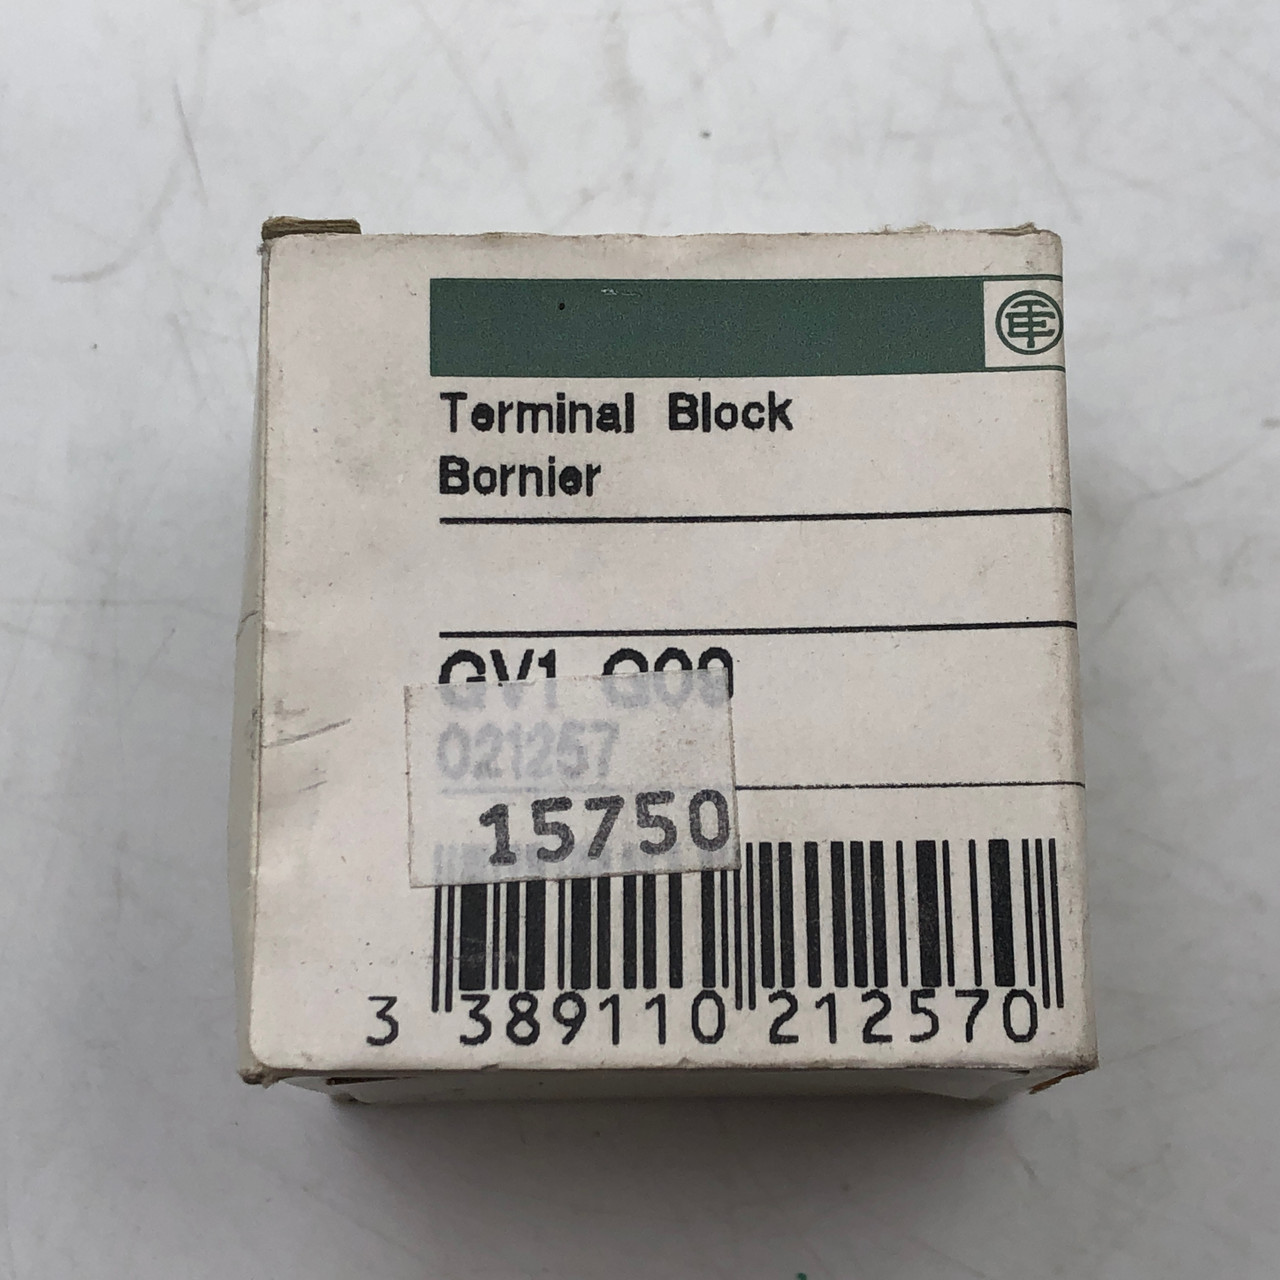 TELEMECANIQUE GV1 G09 MANUAL STARTER TERMINAL BLOCK